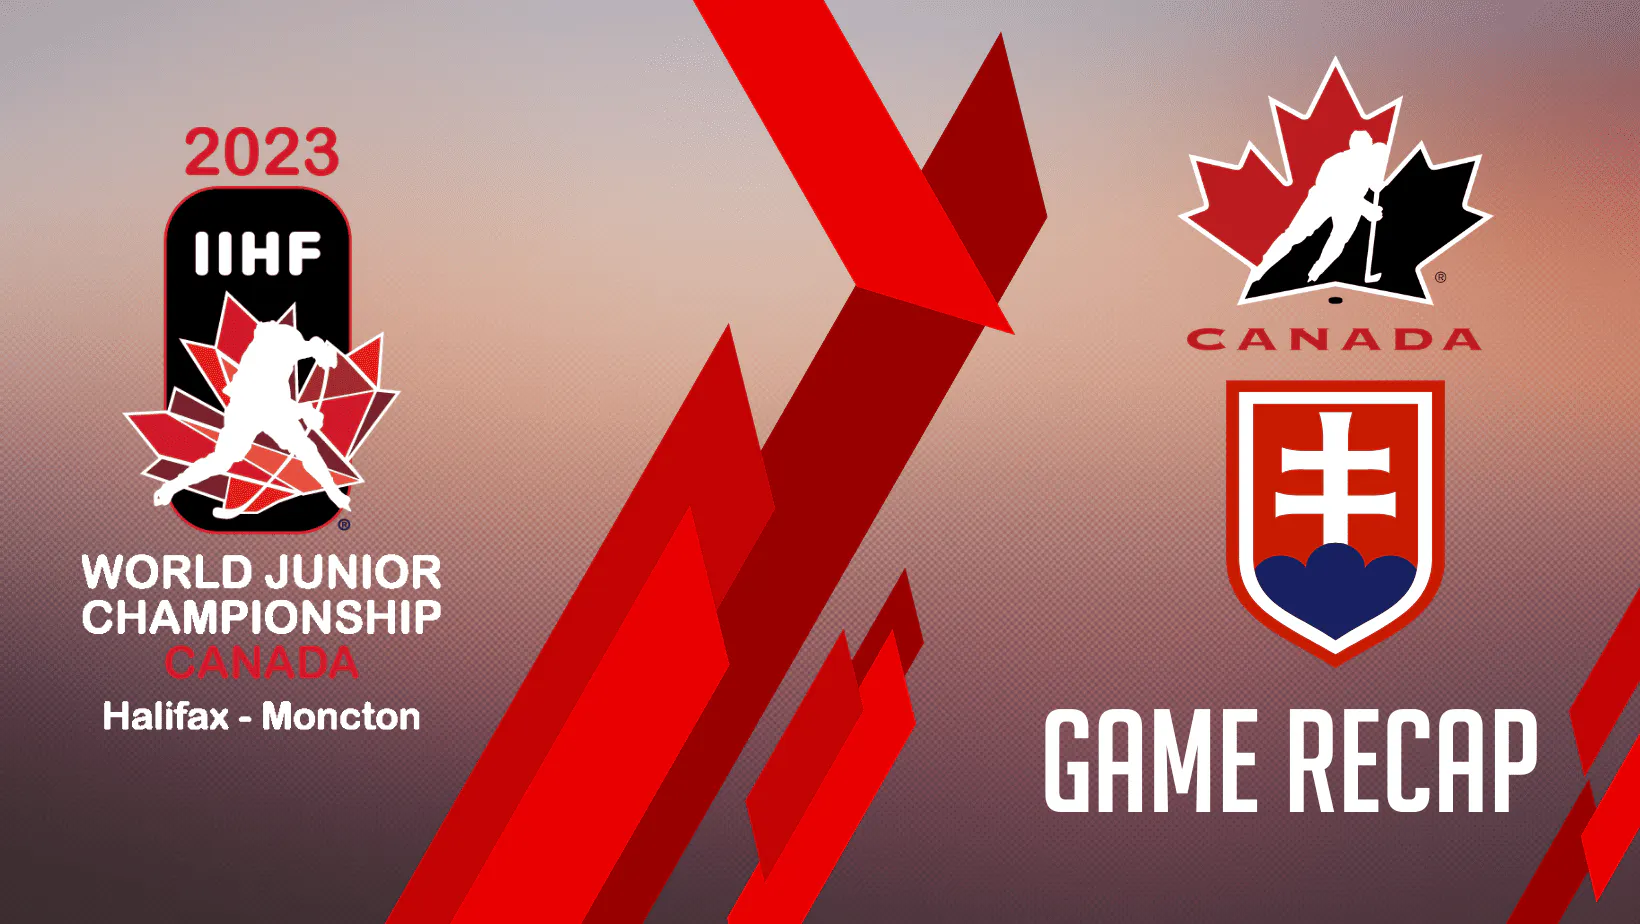 Connor Bedard breaks records, scores game-winner as Canada beats Slovakia in world junior thriller